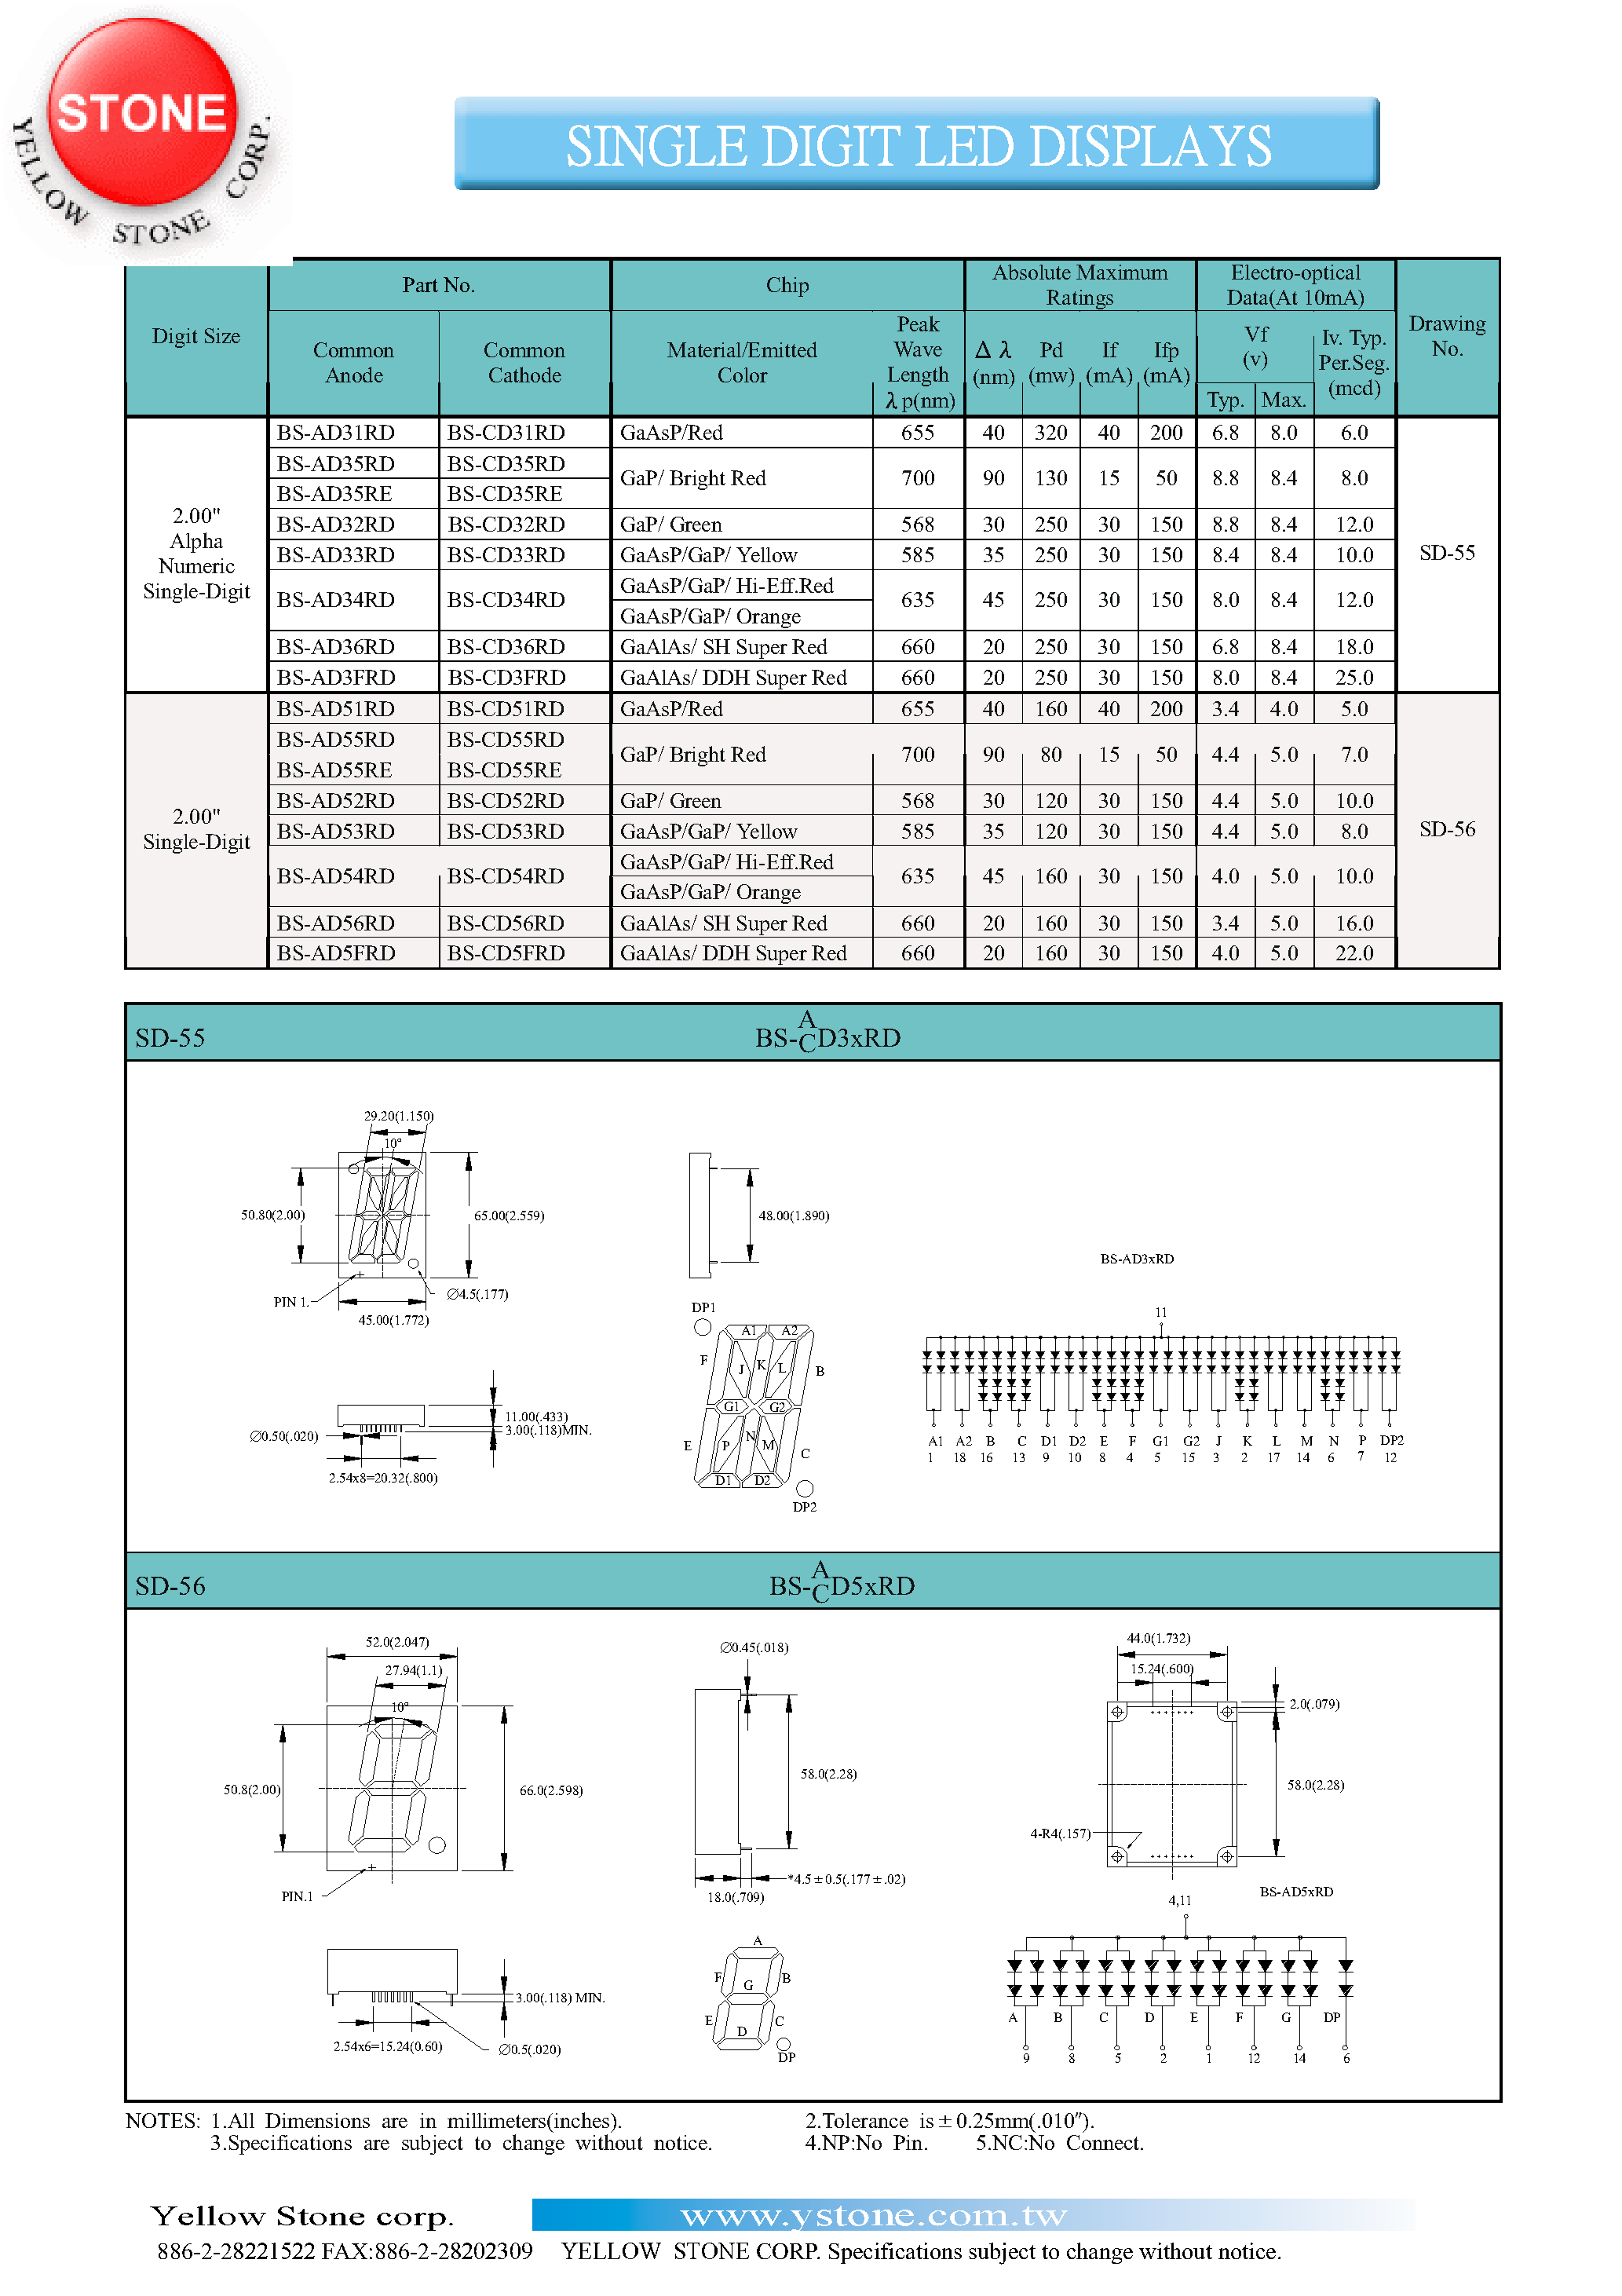 Datasheet BS-AD3FRD - SINGLE DIGIT LED DISPLAYS page 1